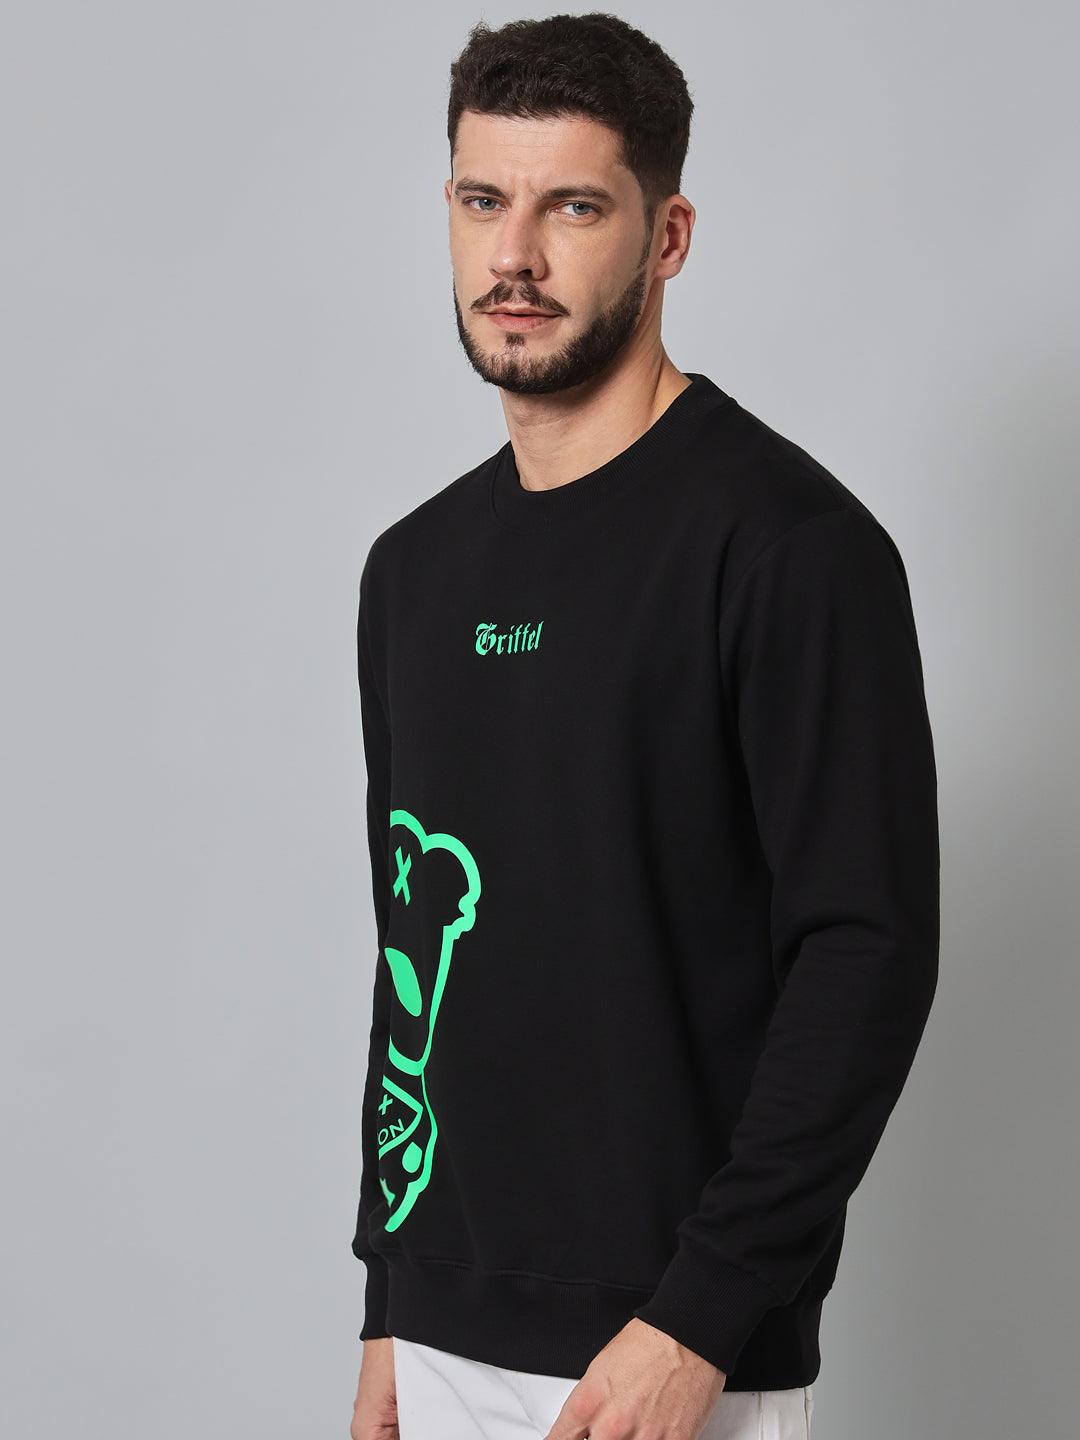 Griffel Men's Cotton Fleece Round Neck Black Green Sweatshirt with Full Sleeve and Teddy Logo Print - griffel